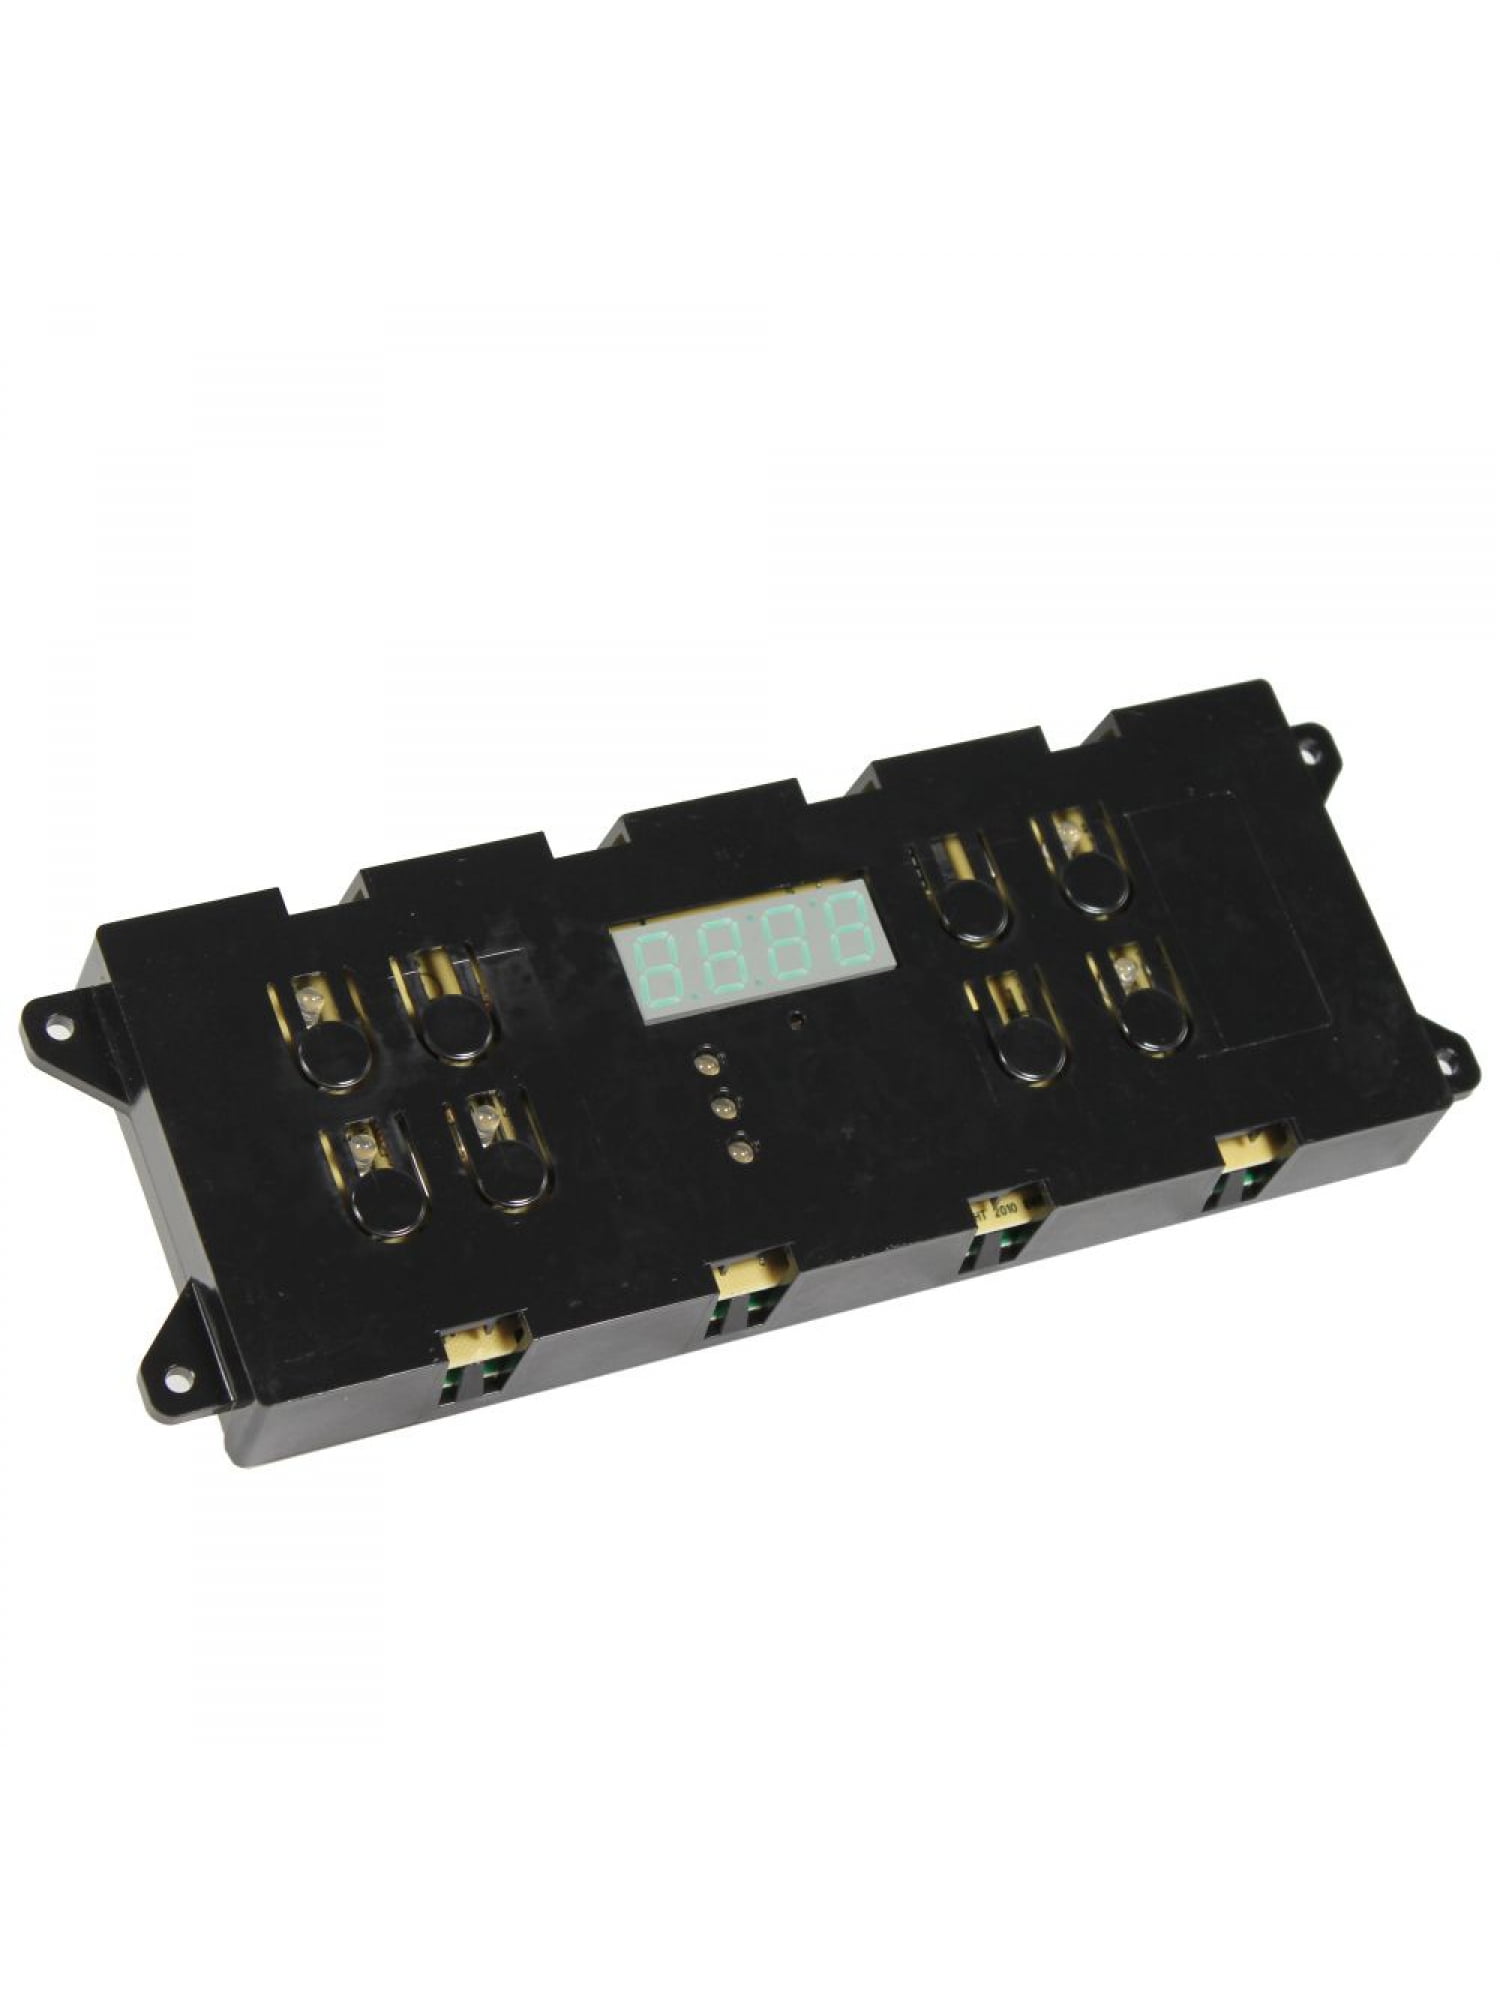 OEM 316207511 316557511 Kenmore Frigidaire Range Oven Control Board New 